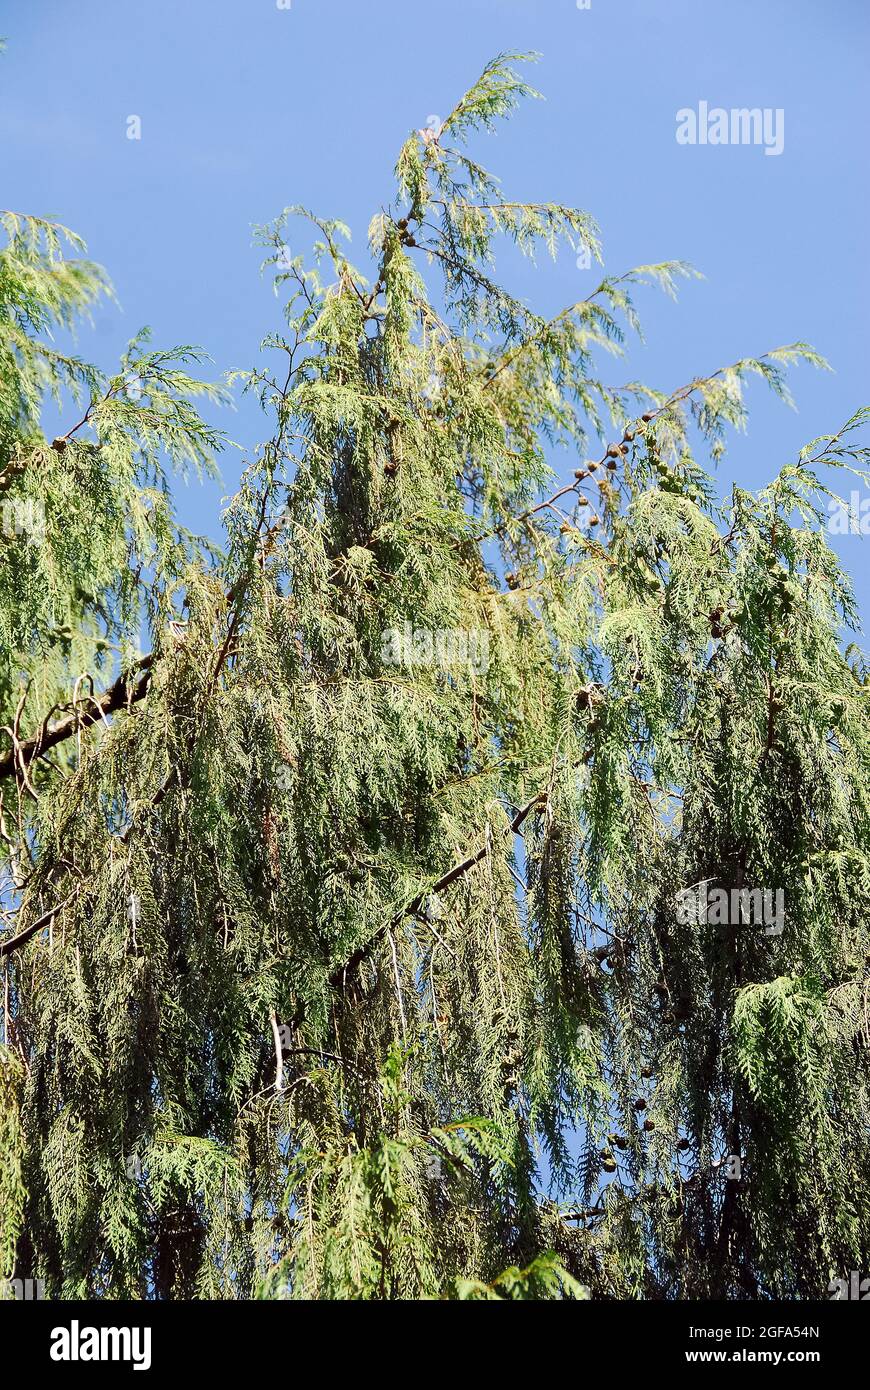 Chinese weeping cypress, Tränen-Zypresse, Chamaecyparis funebris, nyugat-kínai szomorú ciprus Stock Photo